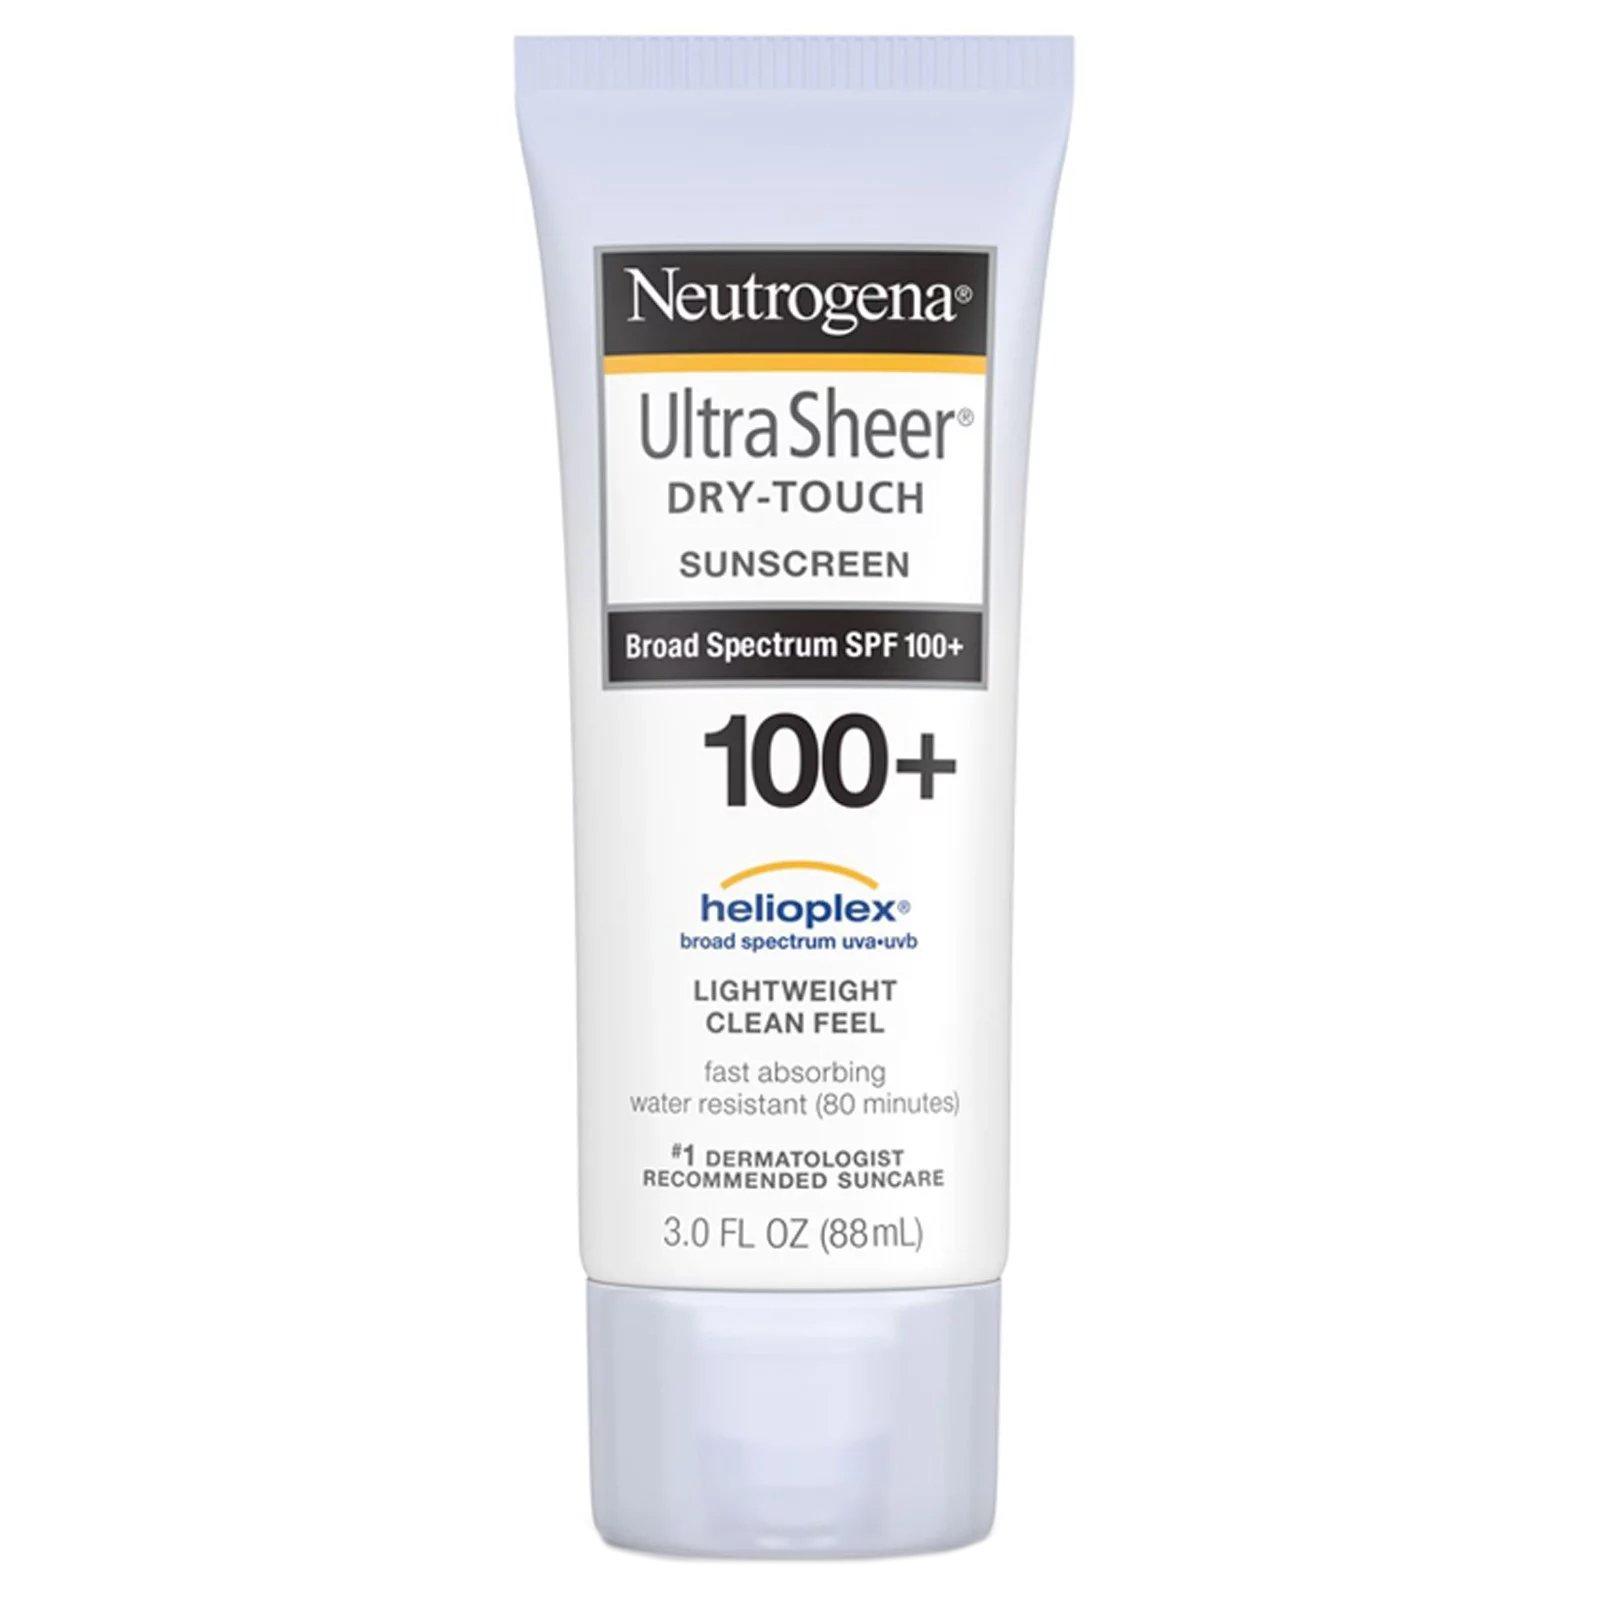 Neutrogena Ultra Sheer Dry-Touch Sunscreen Broad Spectrum SPF 100+